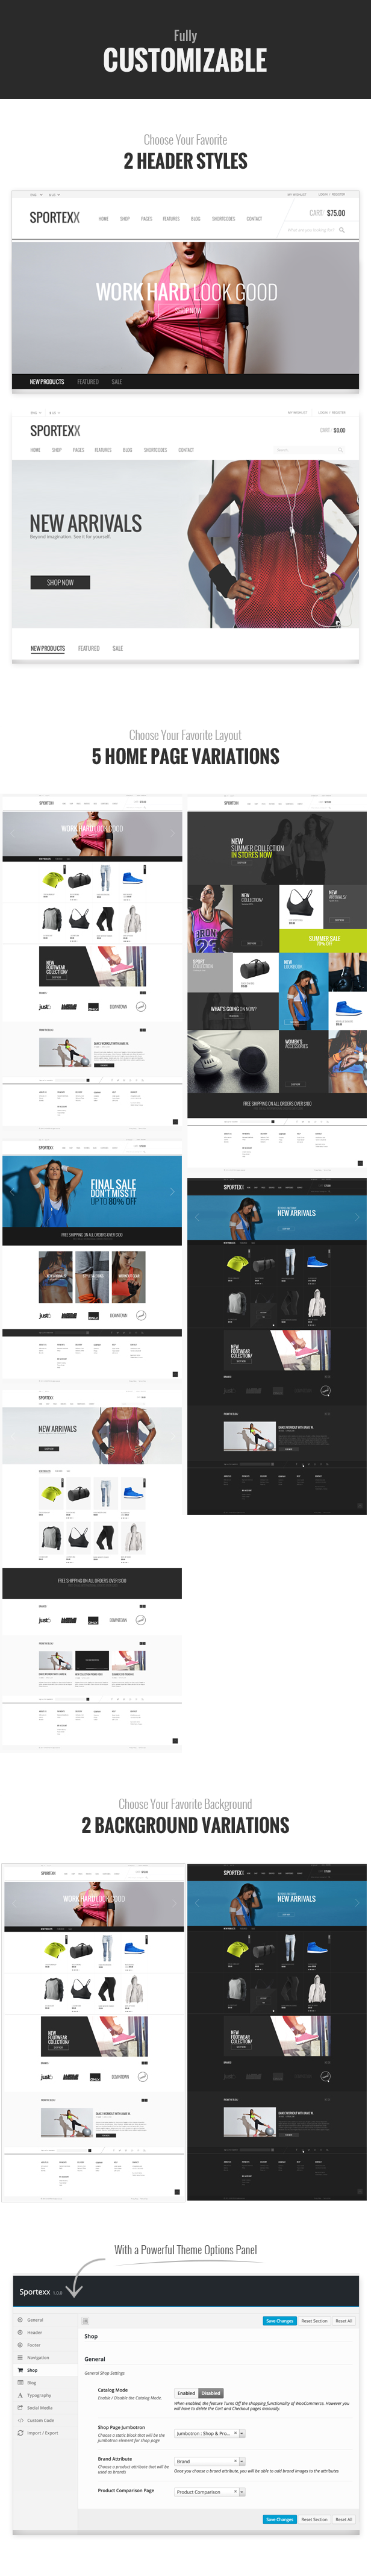 Sportexx - Sports & Gym Fashion WooCommerce Theme - 7